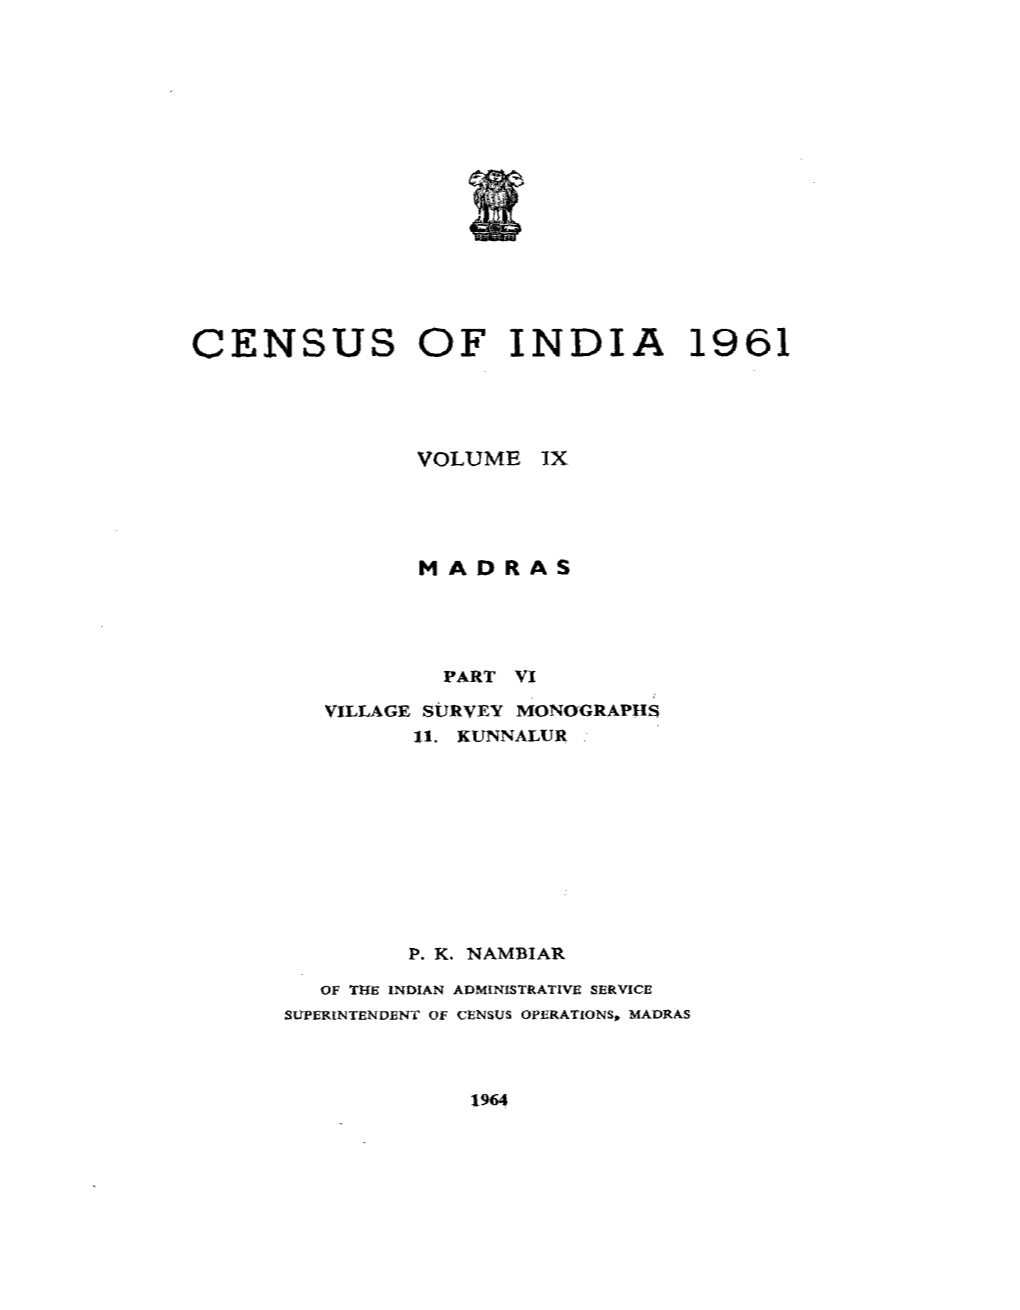 Madras- Village Survey Monographs, 11 Kunnalur, Part VI, Vol-IX